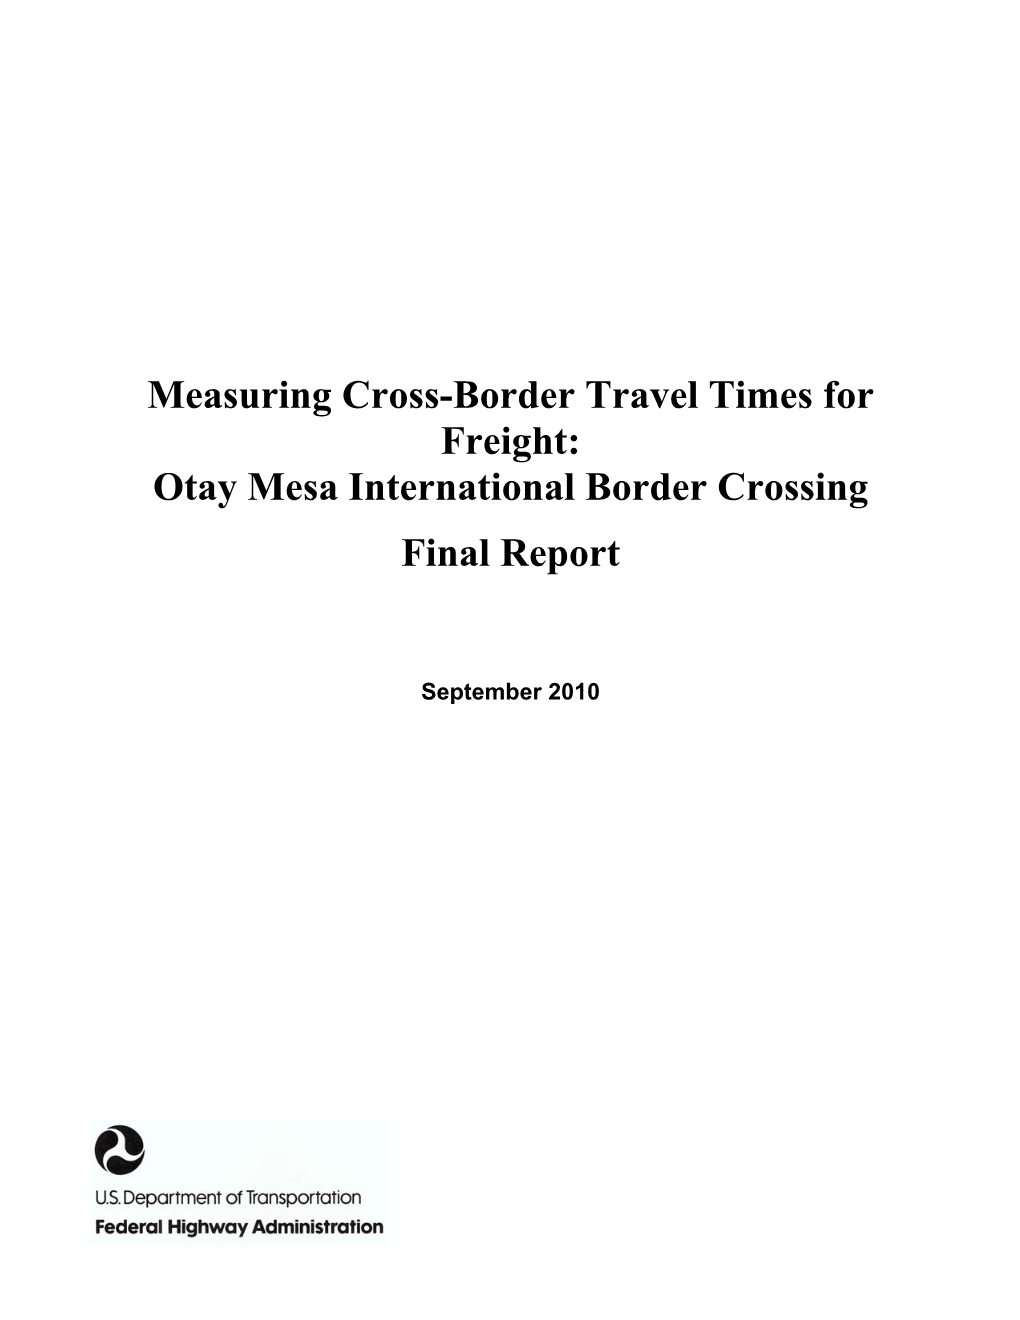 Otay Mesa International Border Crossing Final Report